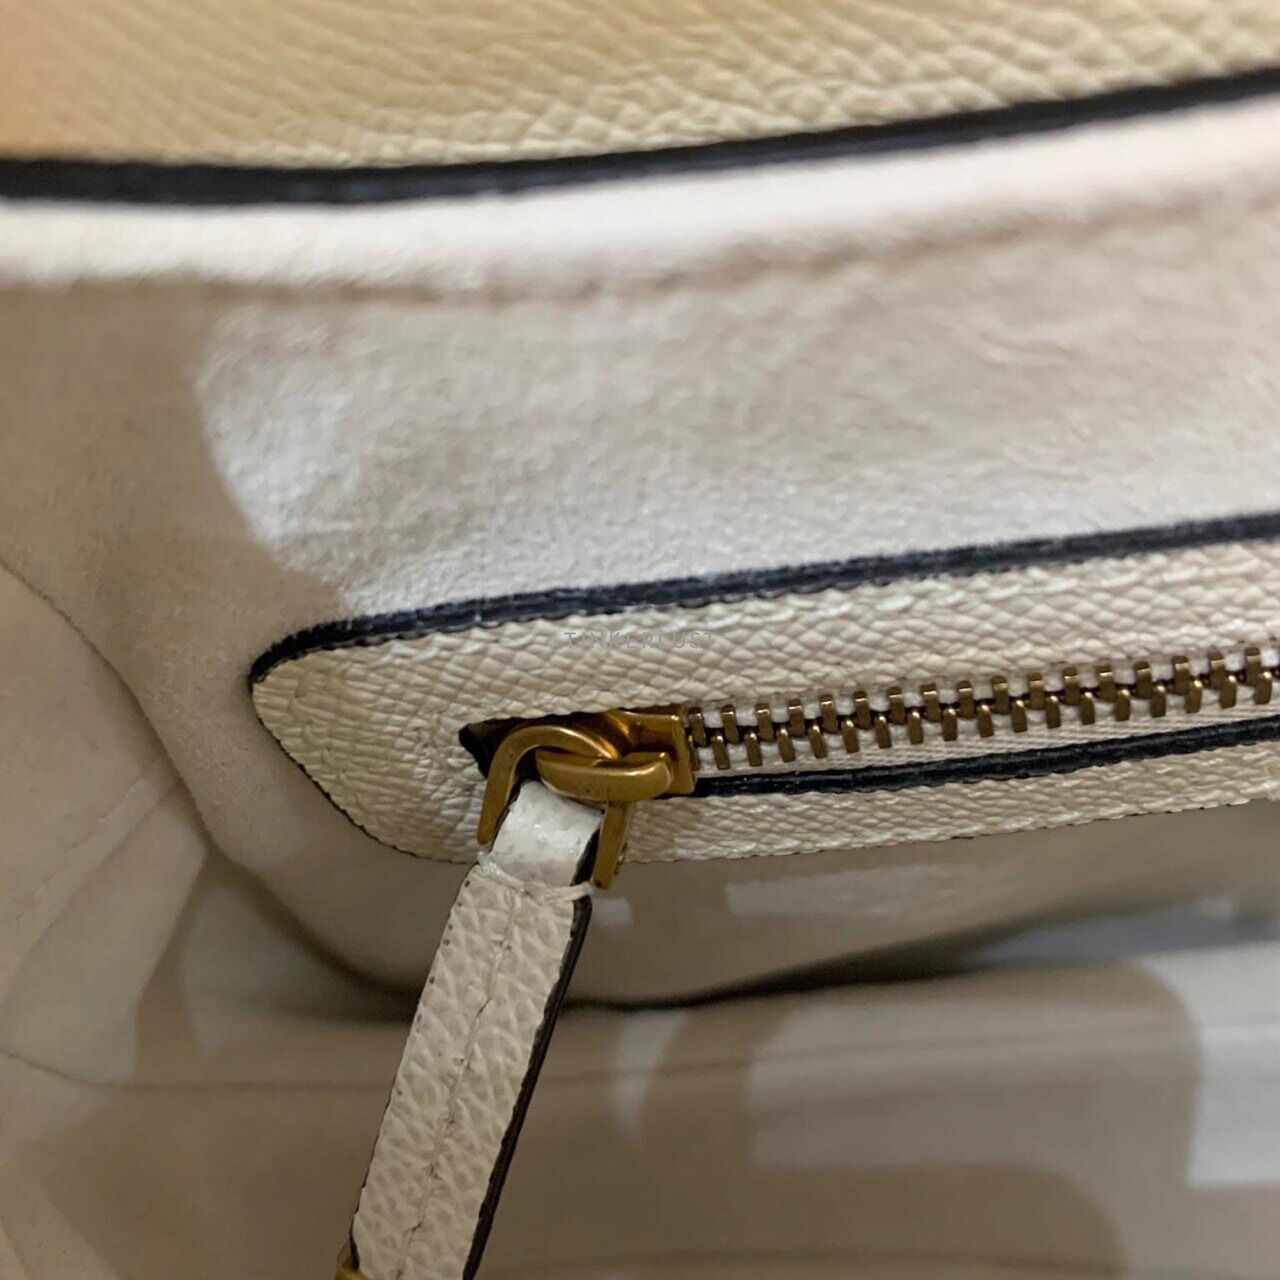 Christian Dior Saddle Medium in White Grained GHW 2022 Shoulder Bag